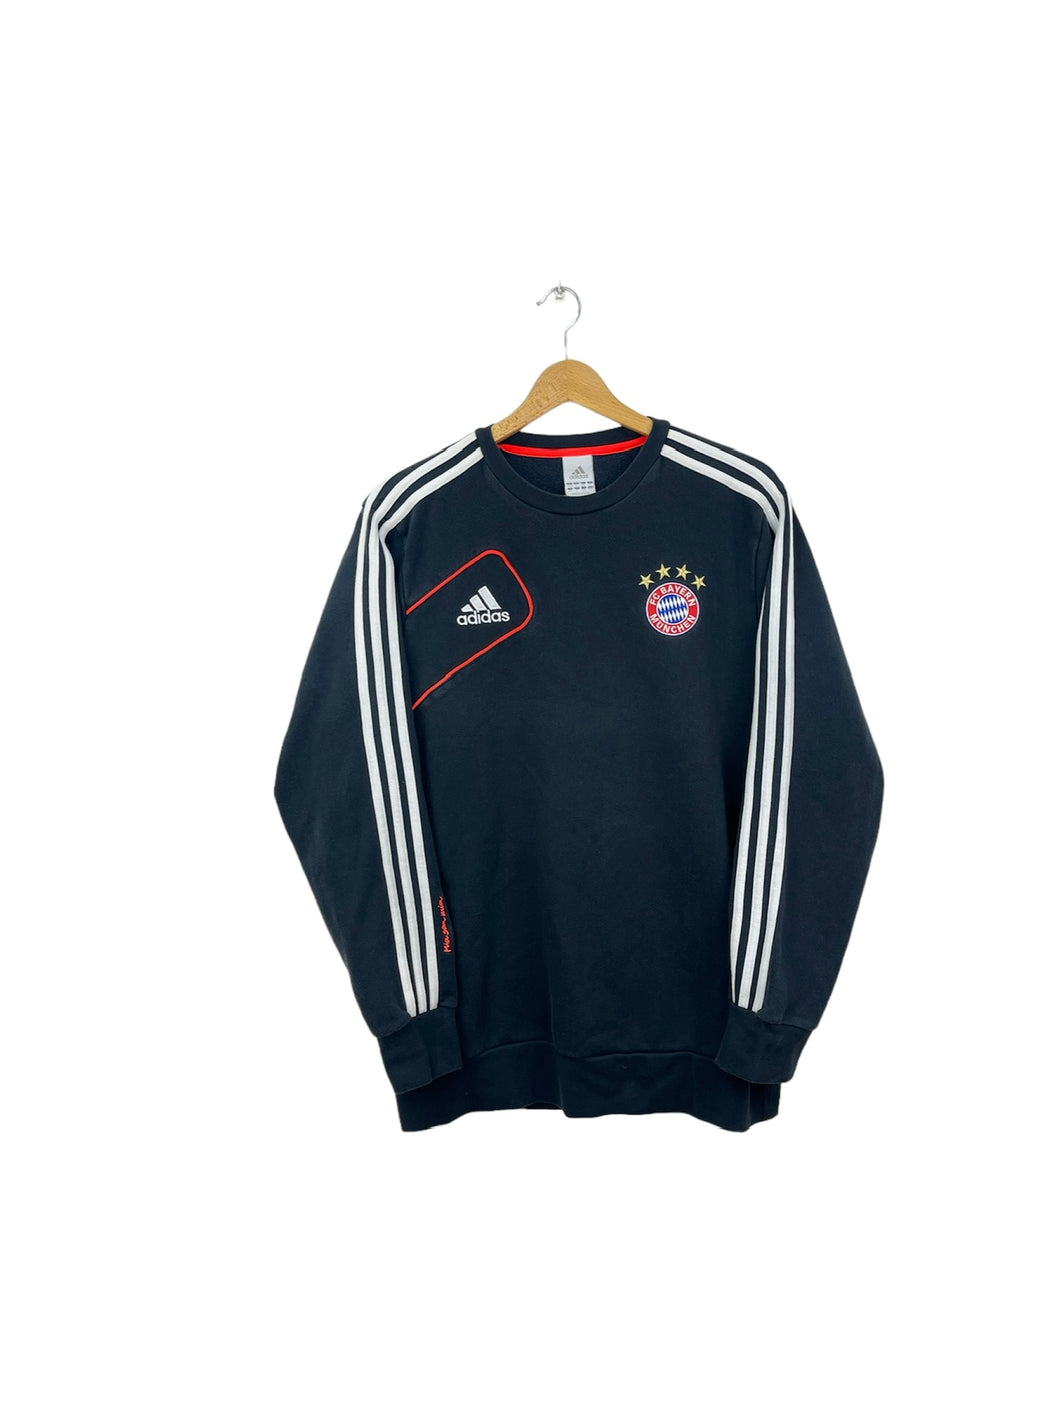 Adidas Bayern Munich Sweatshirt - XLarge